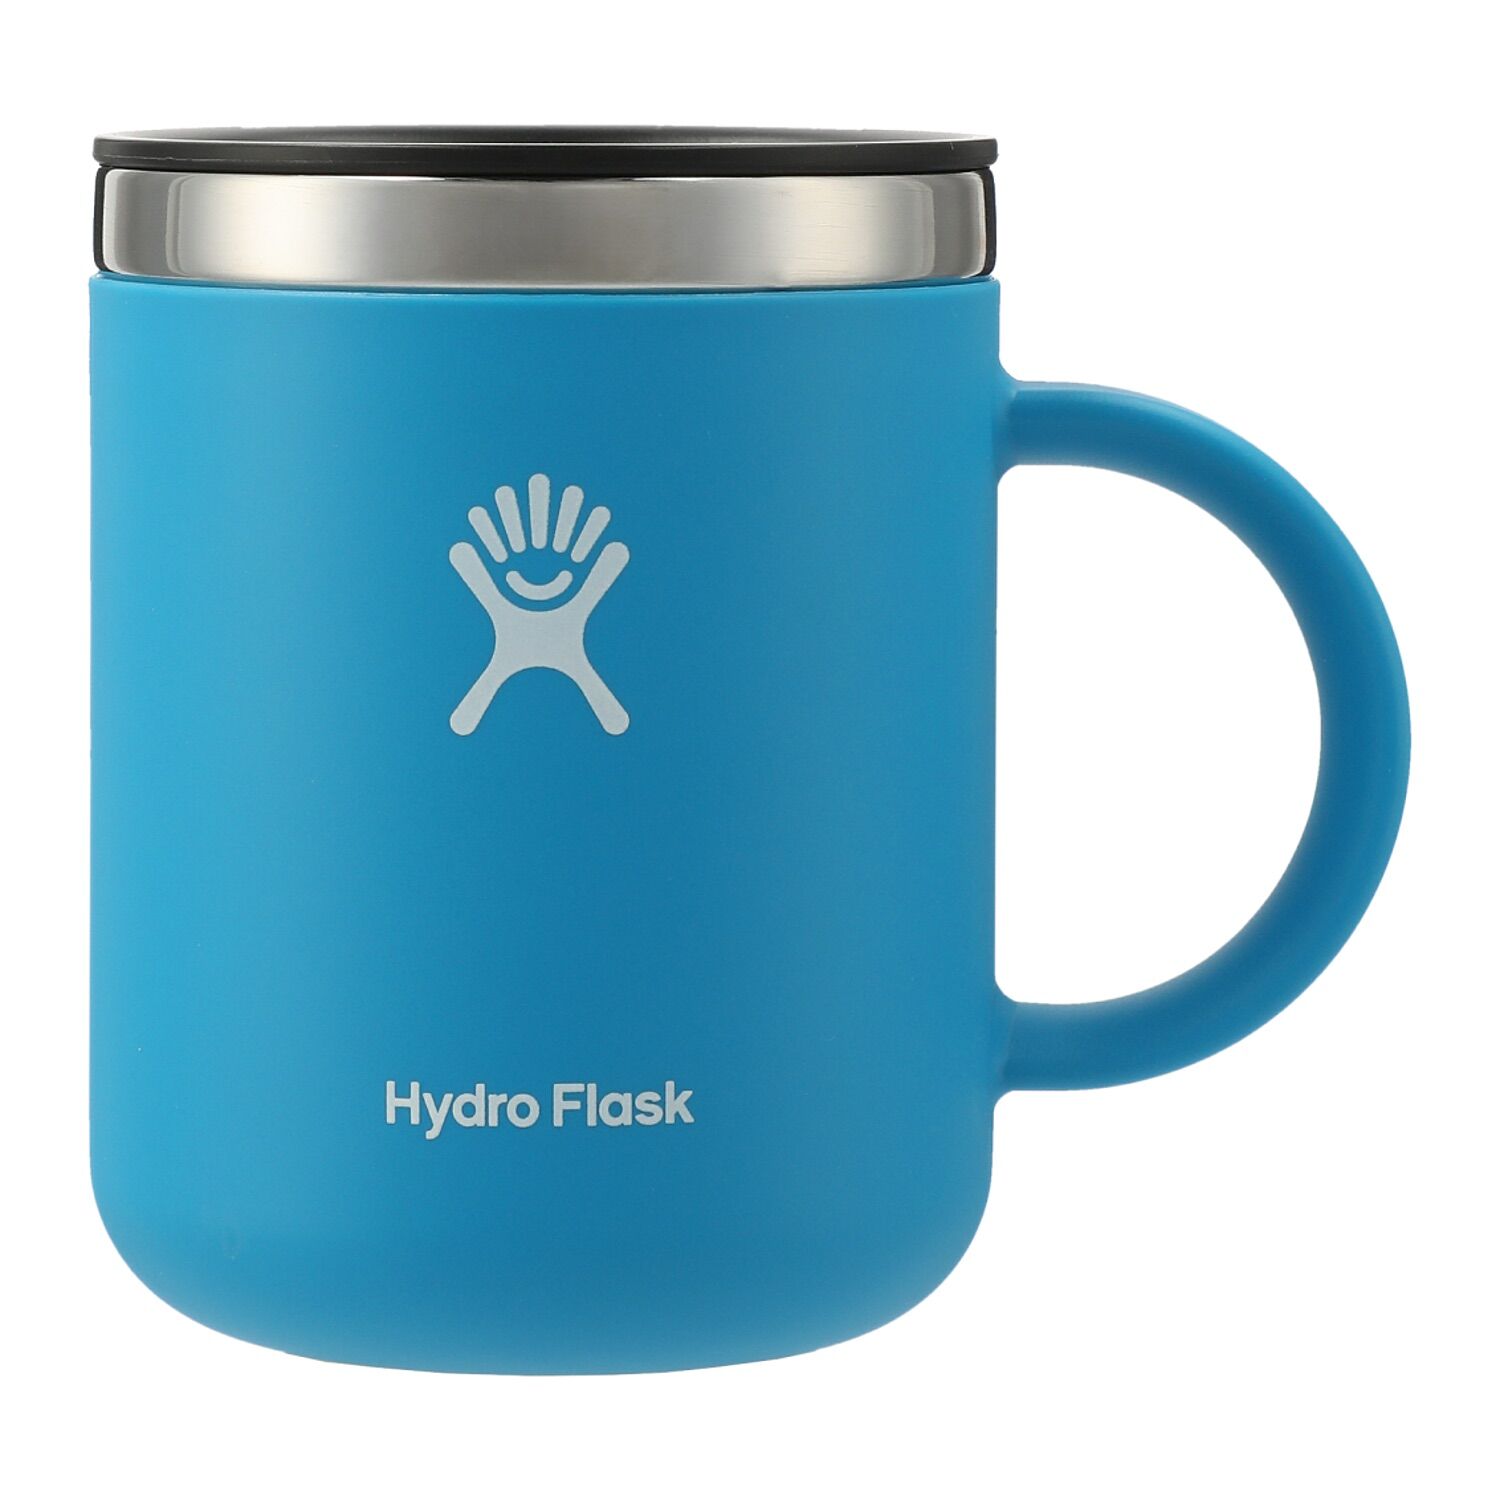 https://www.drivemerch.com/wp-content/uploads/2022/08/branded-hydro-flask-coffee-mug-12-oz-pacific-logo.jpg